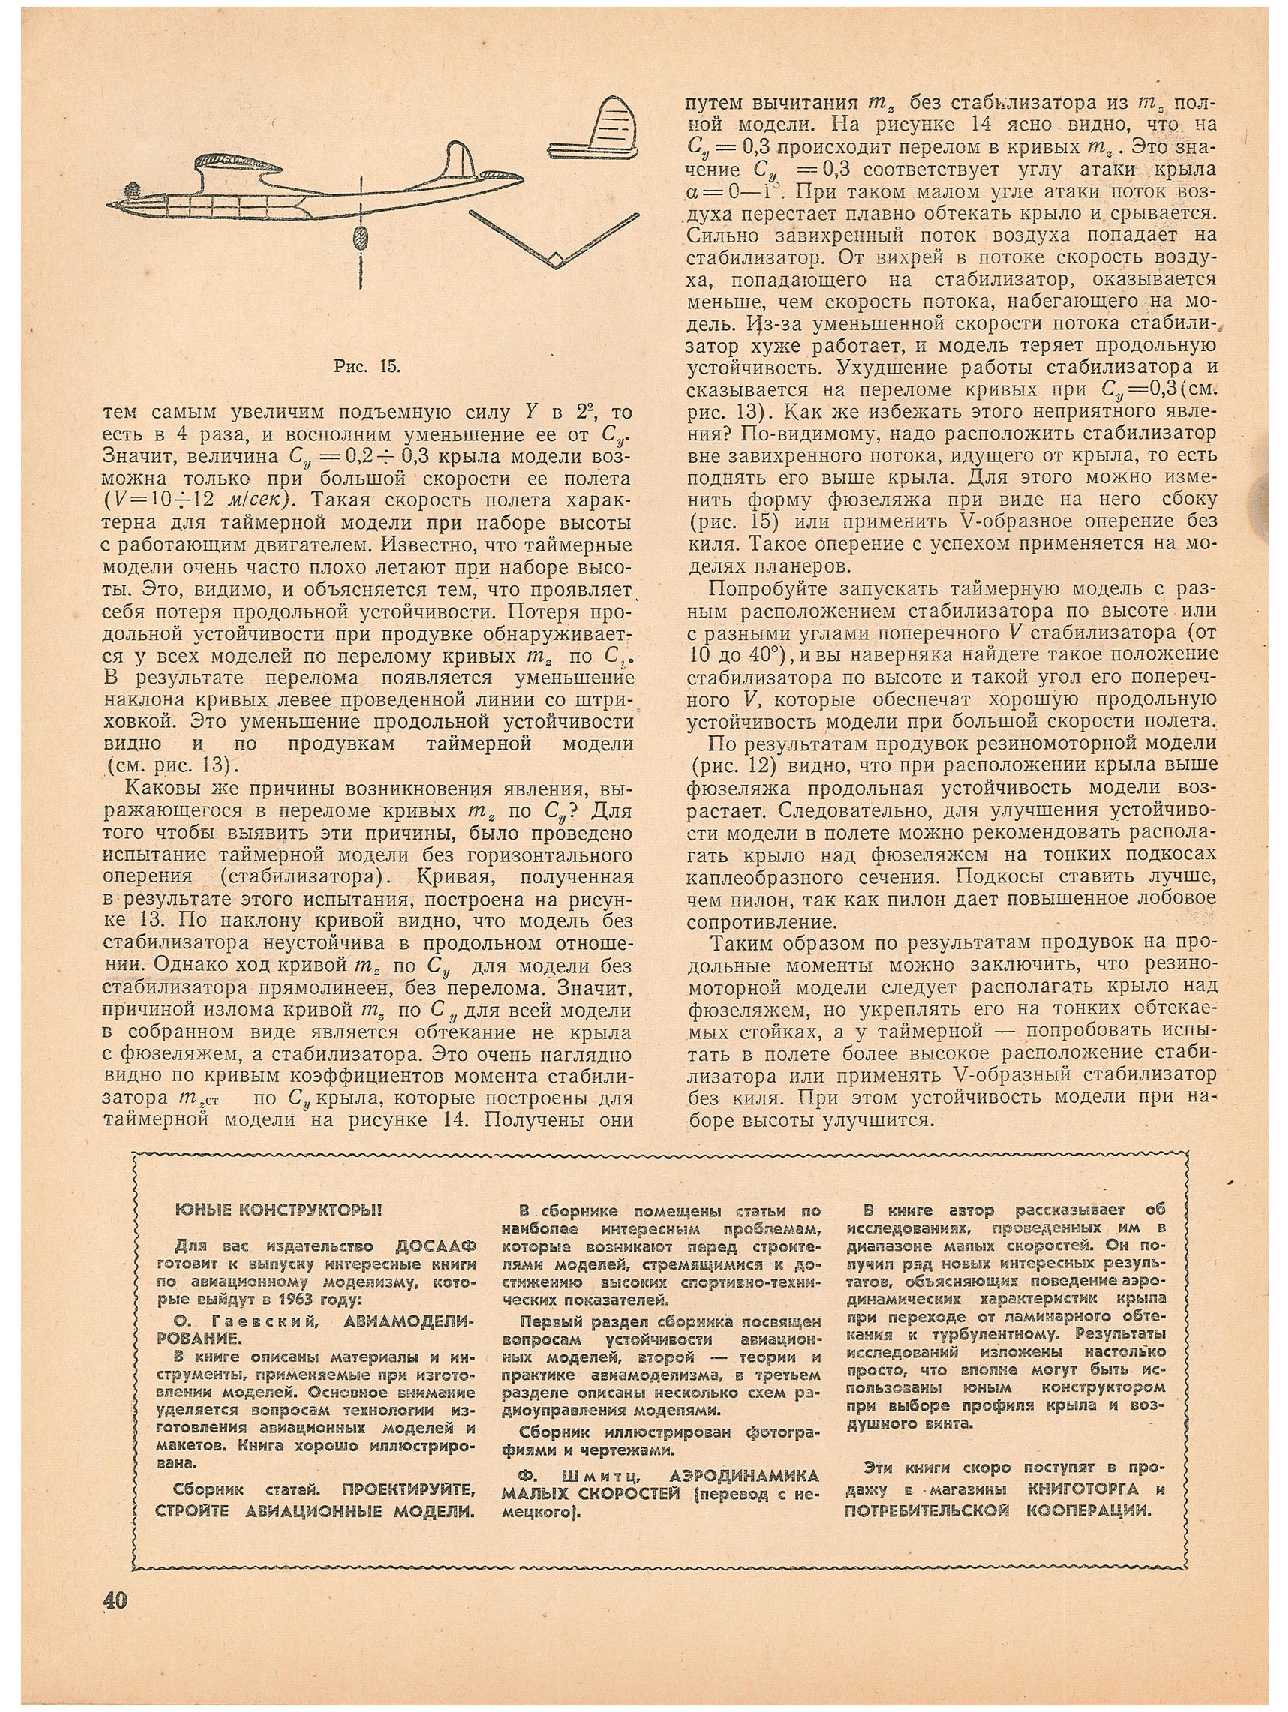 ЮМК 4, 1963, 40 c.